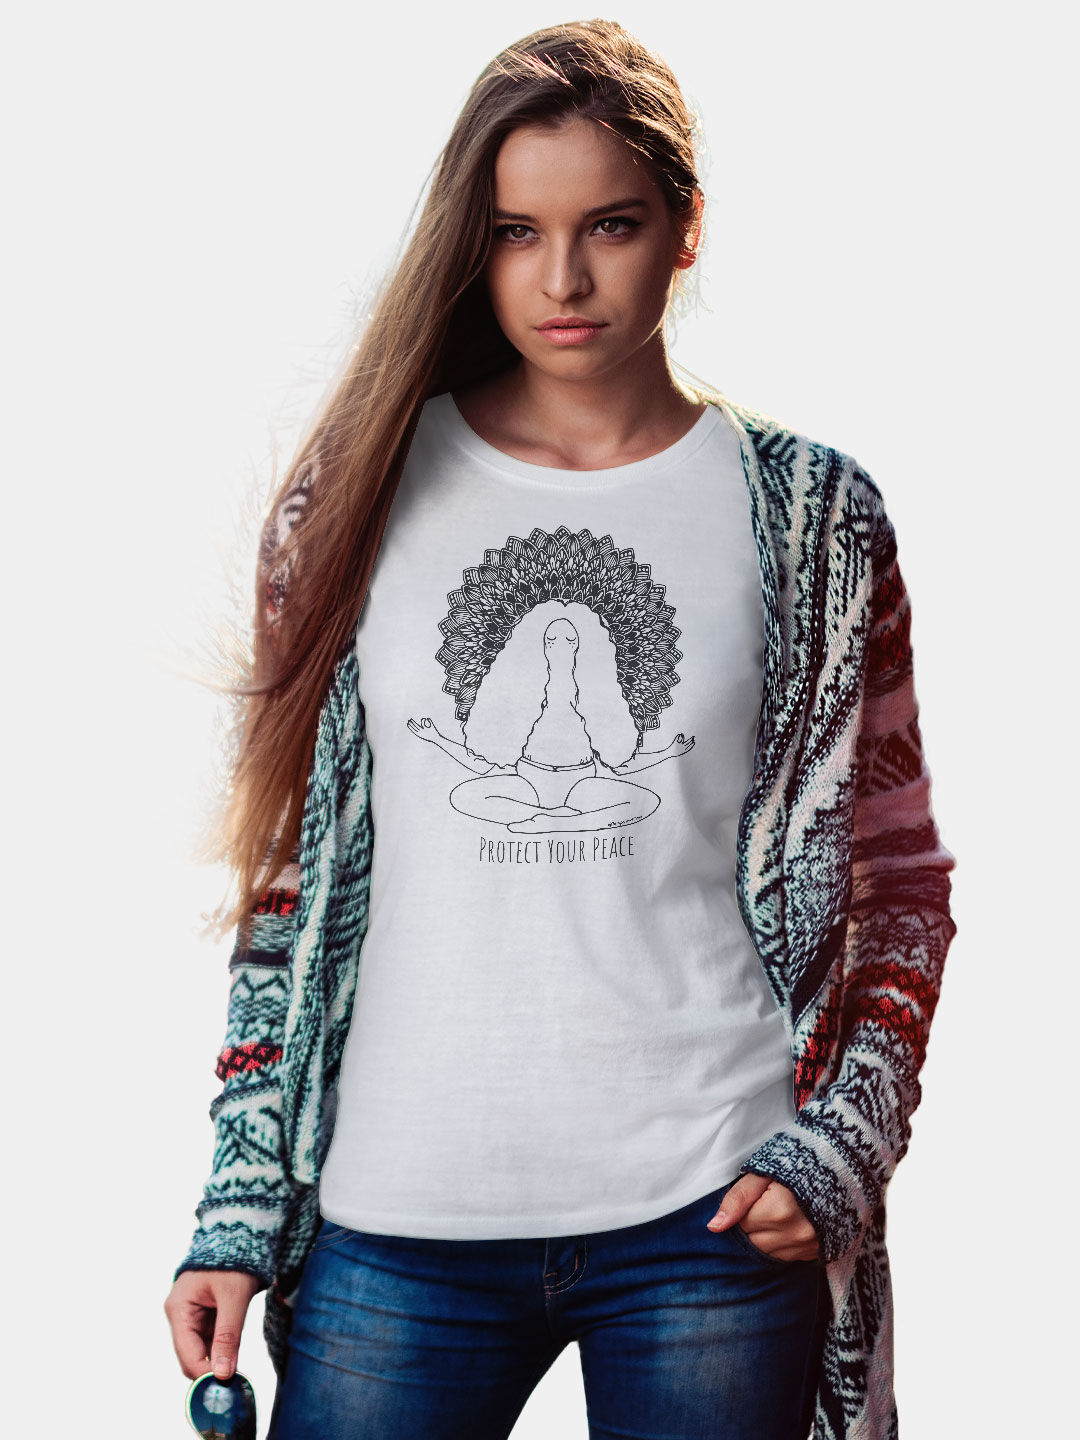 Buy Peace White - Female Designer T-Shirts T-Shirts Online